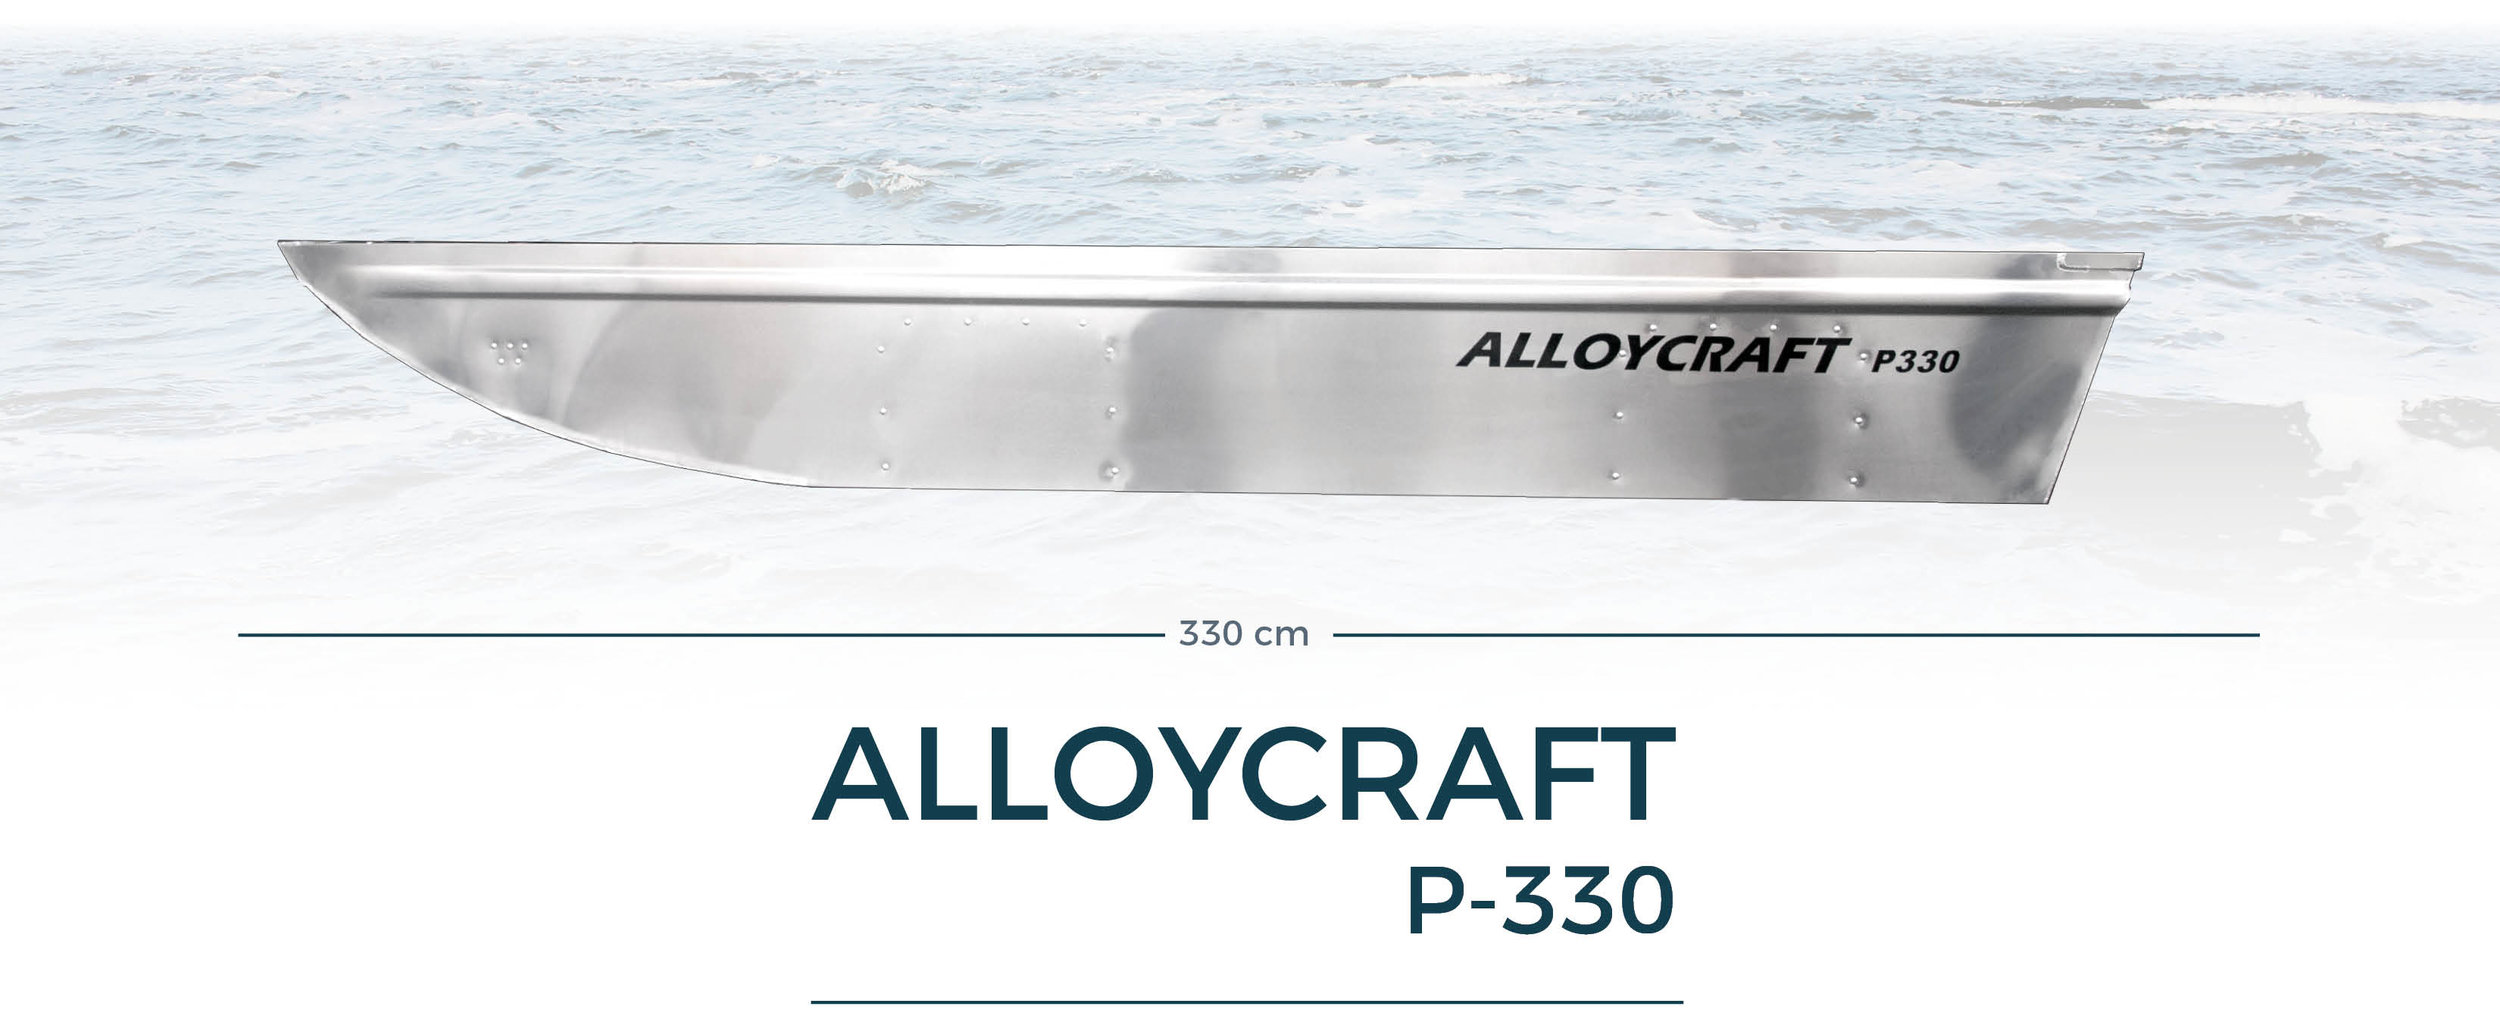 Båt Alloycraft P-330